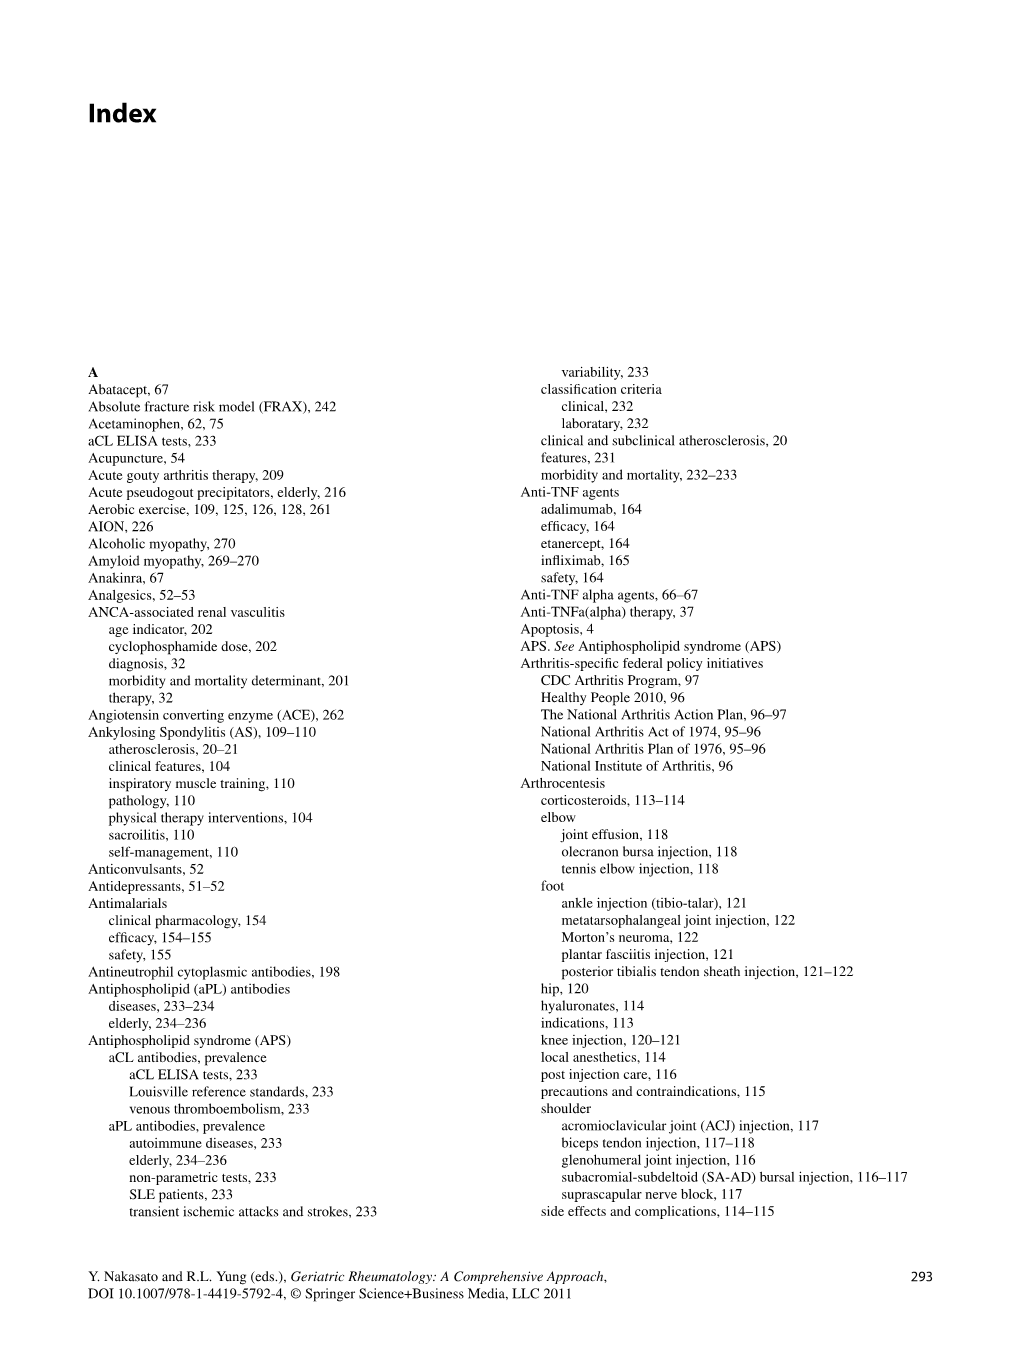 293 Y. Nakasato and R.L. Yung (Eds.), Geriatric Rheumatology: A